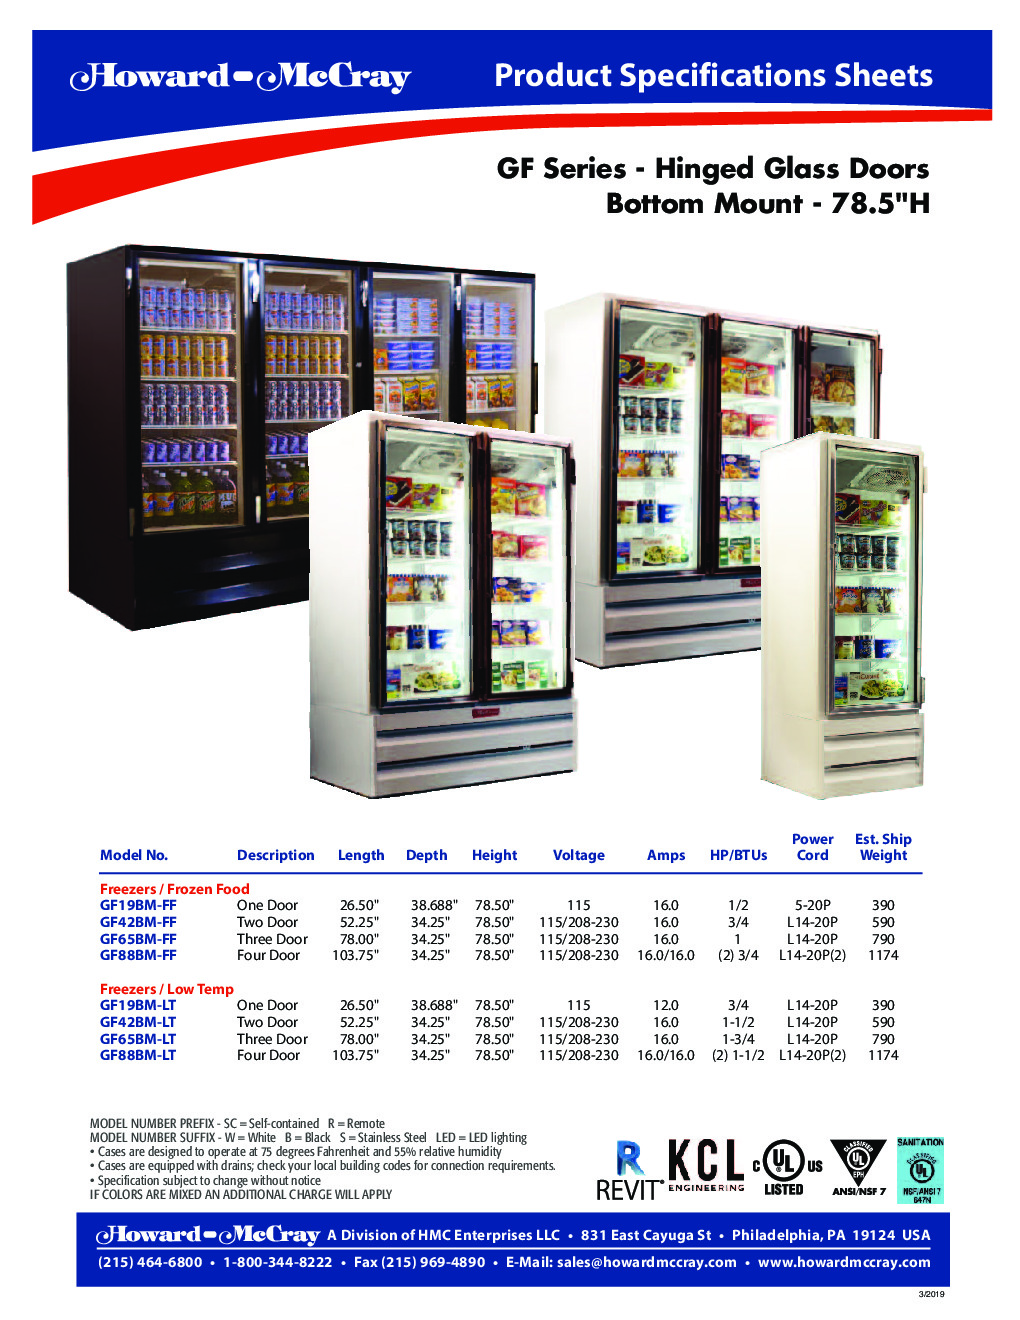 Howard-McCray GF88BM-B-LT Merchandiser Freezer